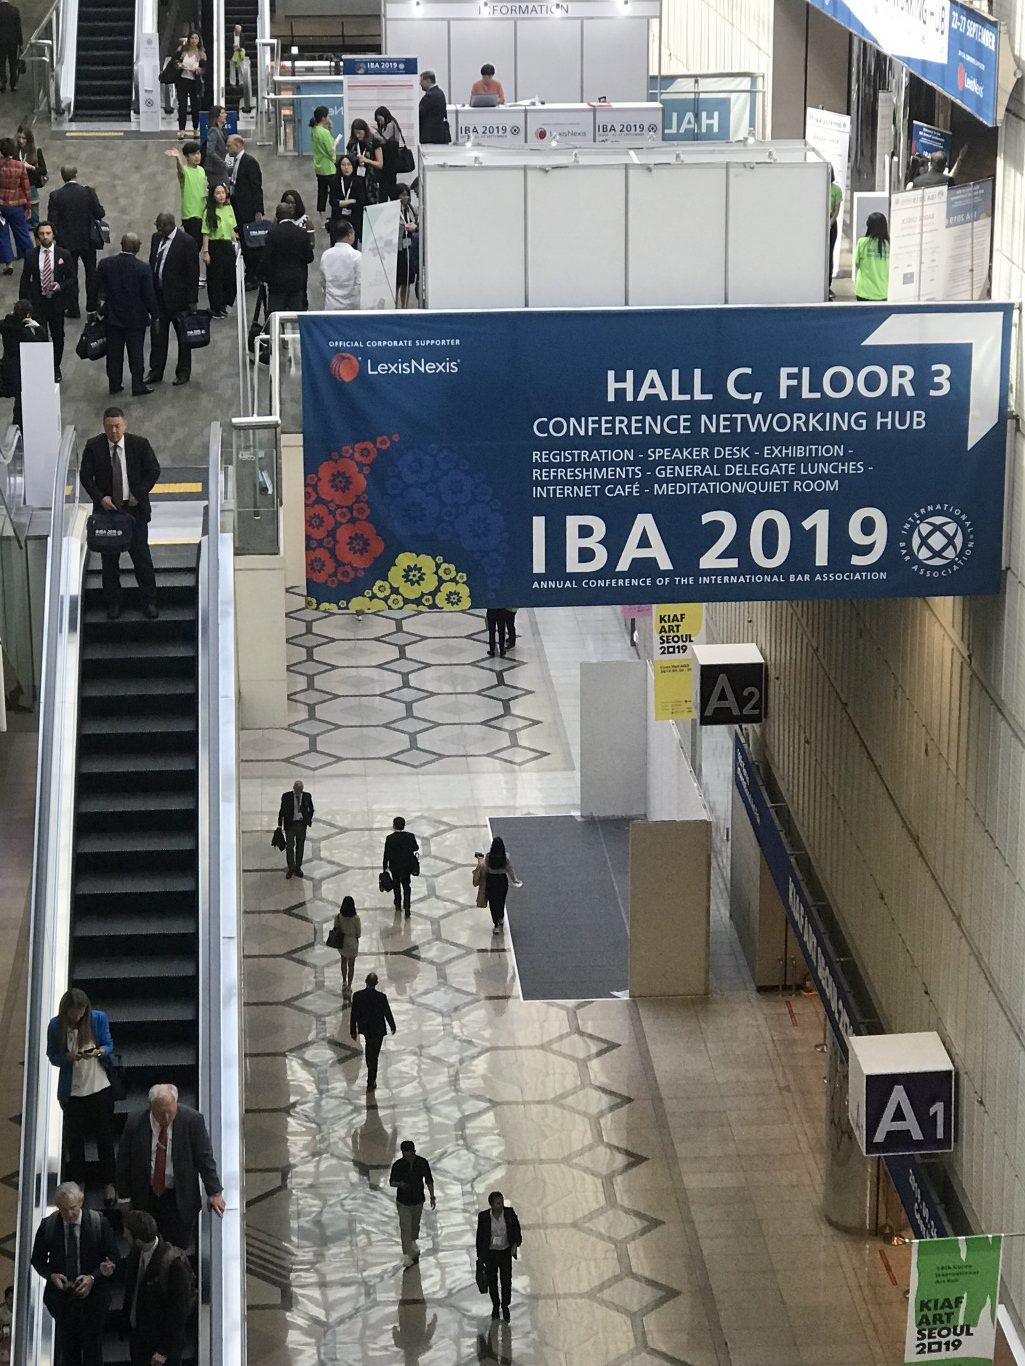 IBA 2019 in Seoul, Korea held at Coex Exhibition Center